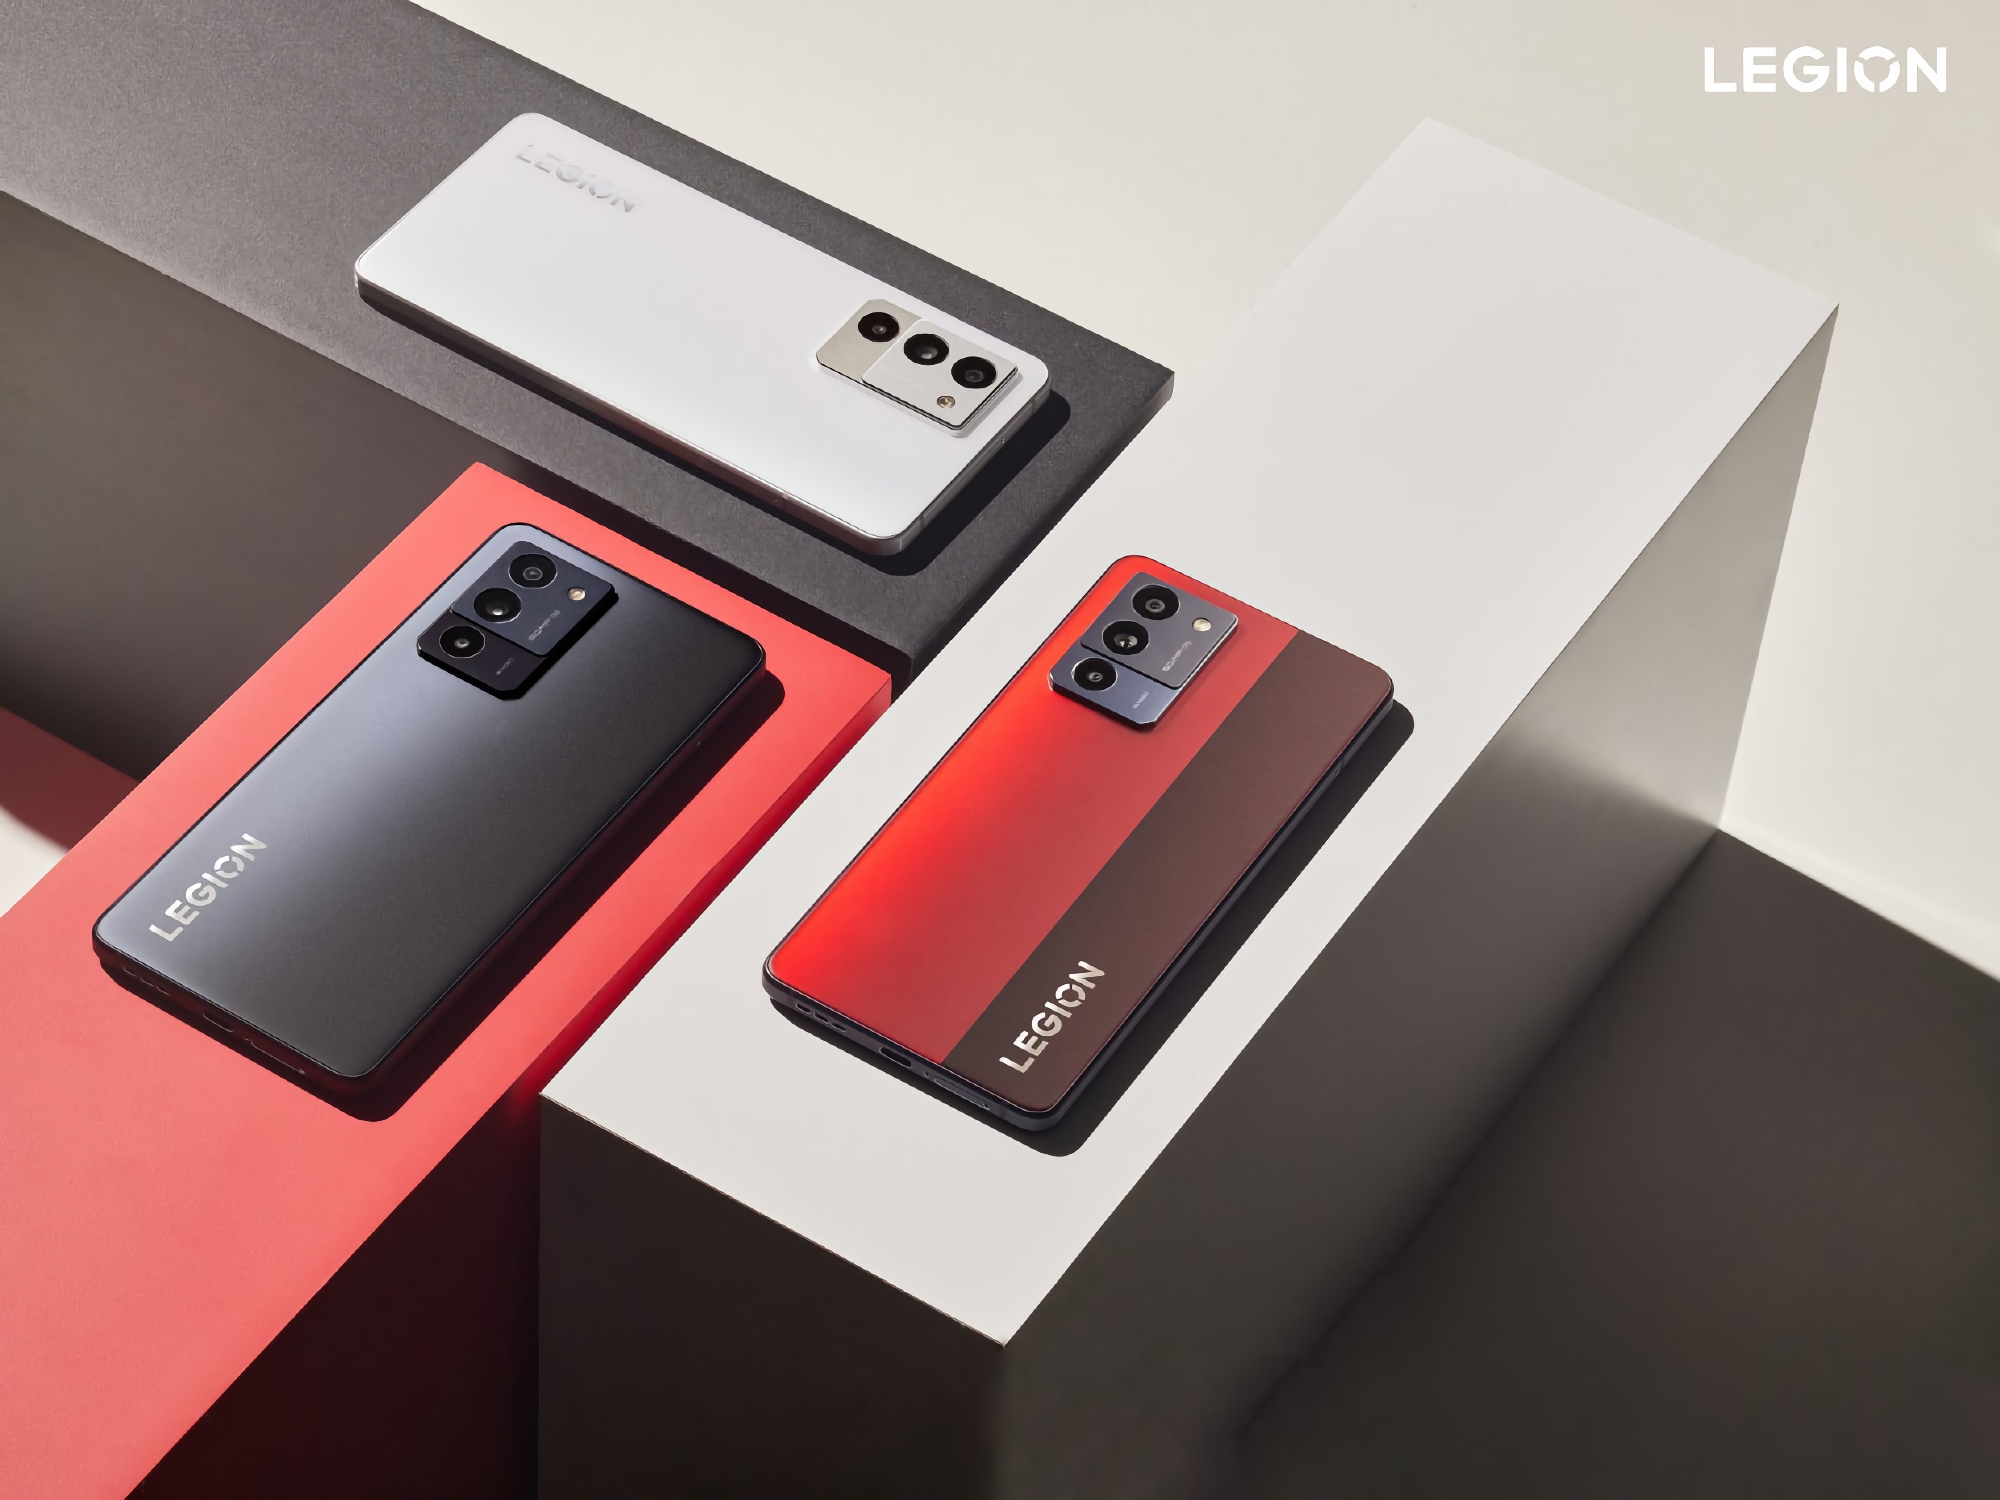 Rumeur : Lenovo fermerait la gamme Legion de smartphones de jeu